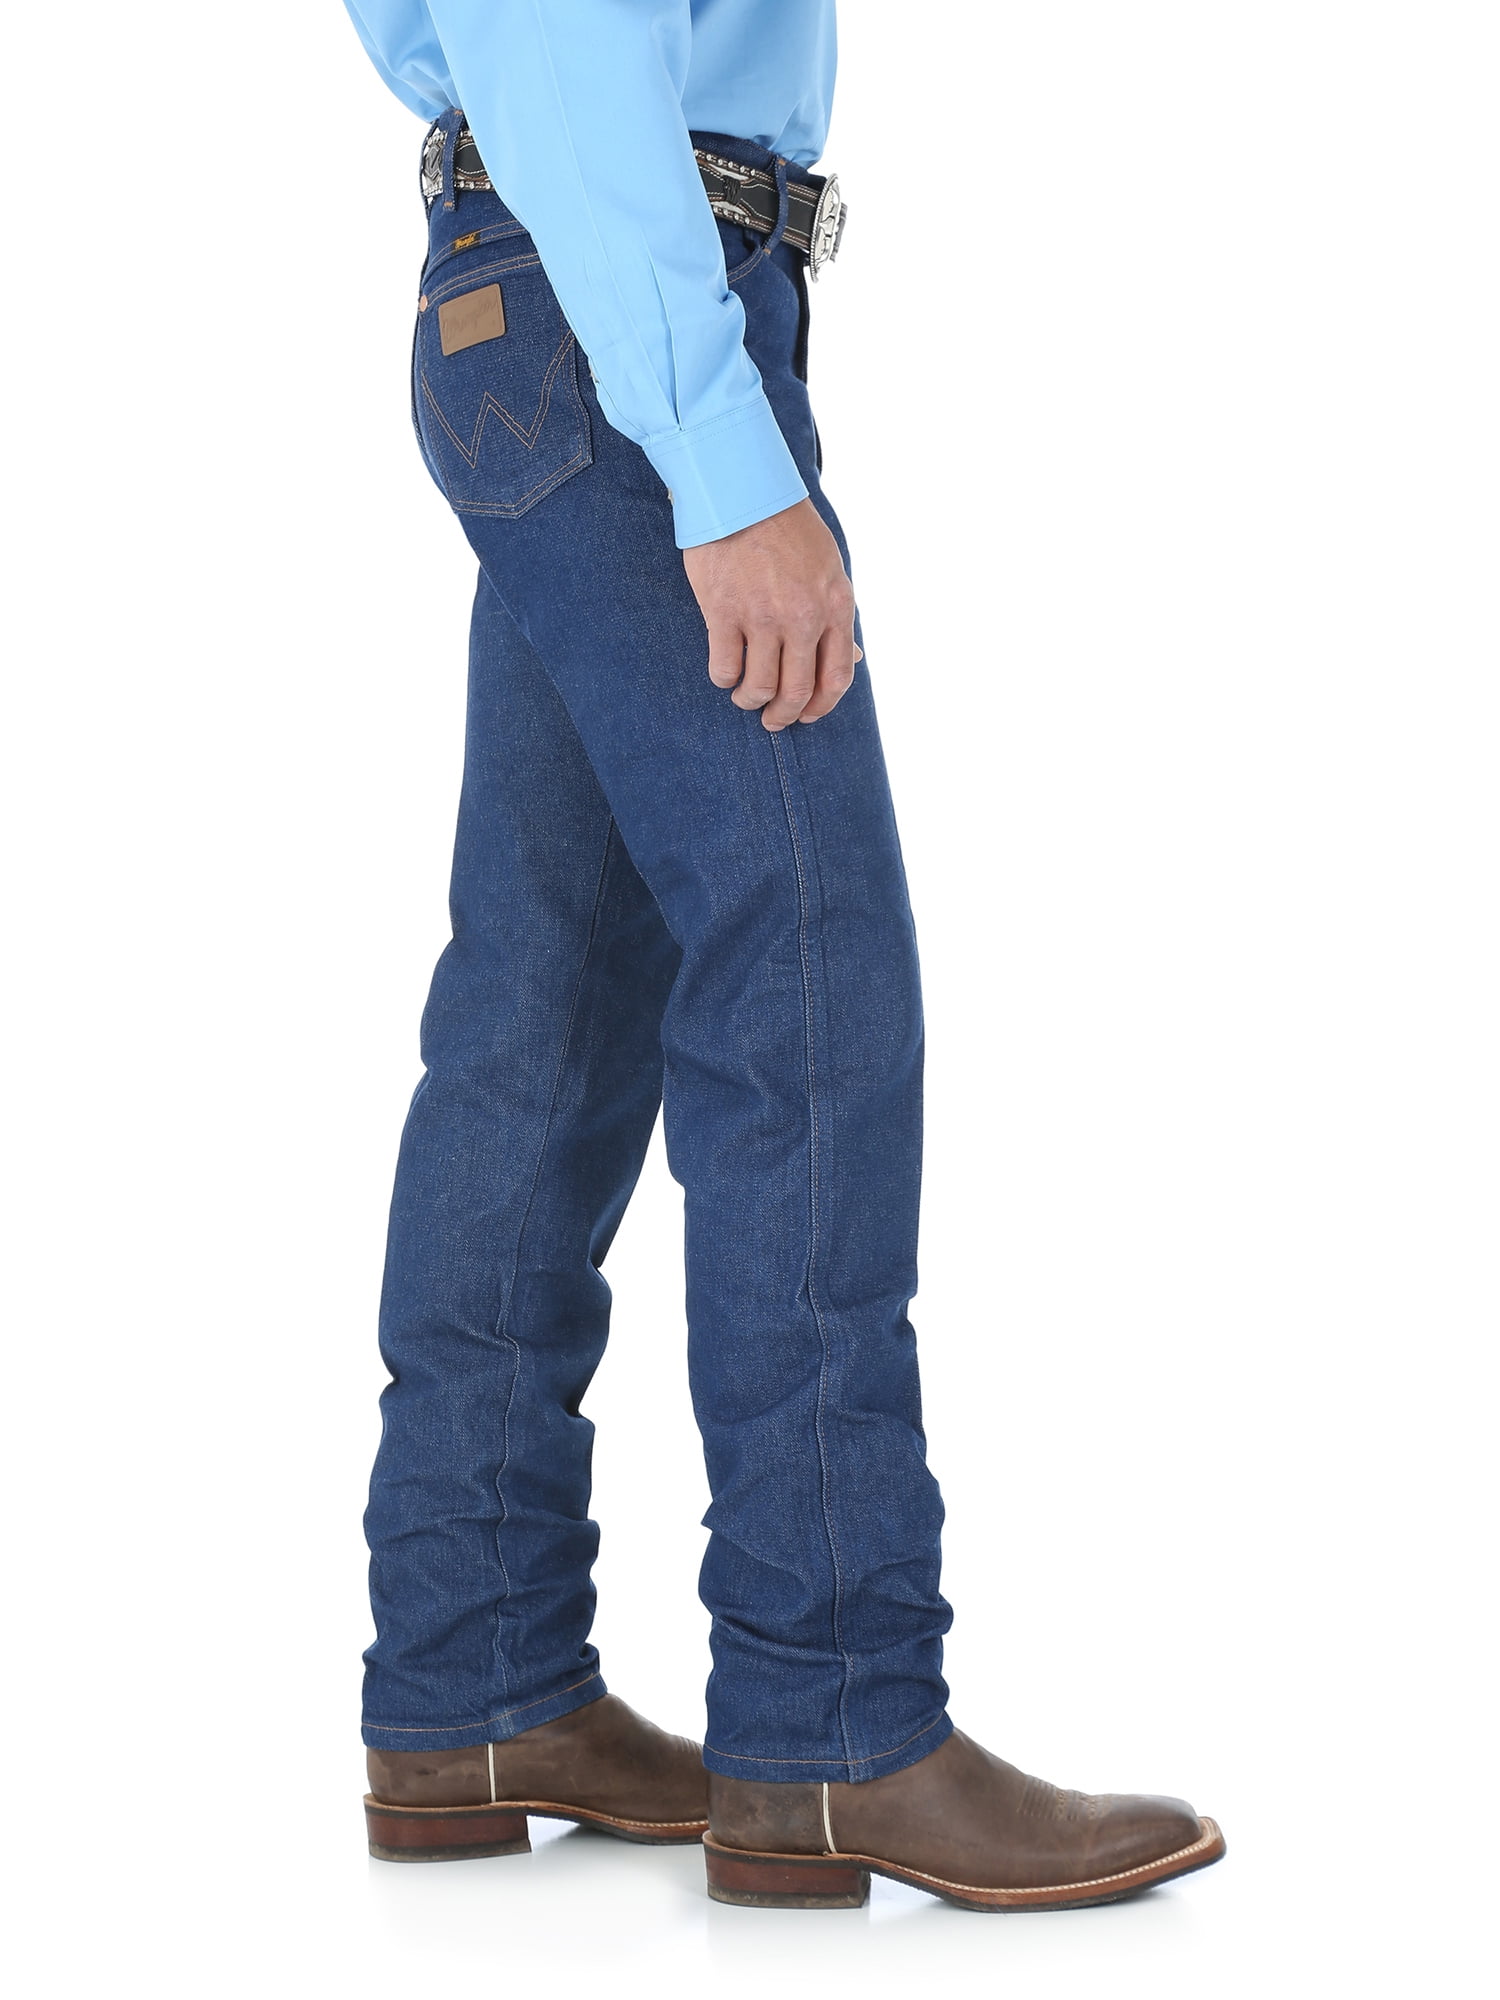 wrangler cowboy cut jeans at walmart